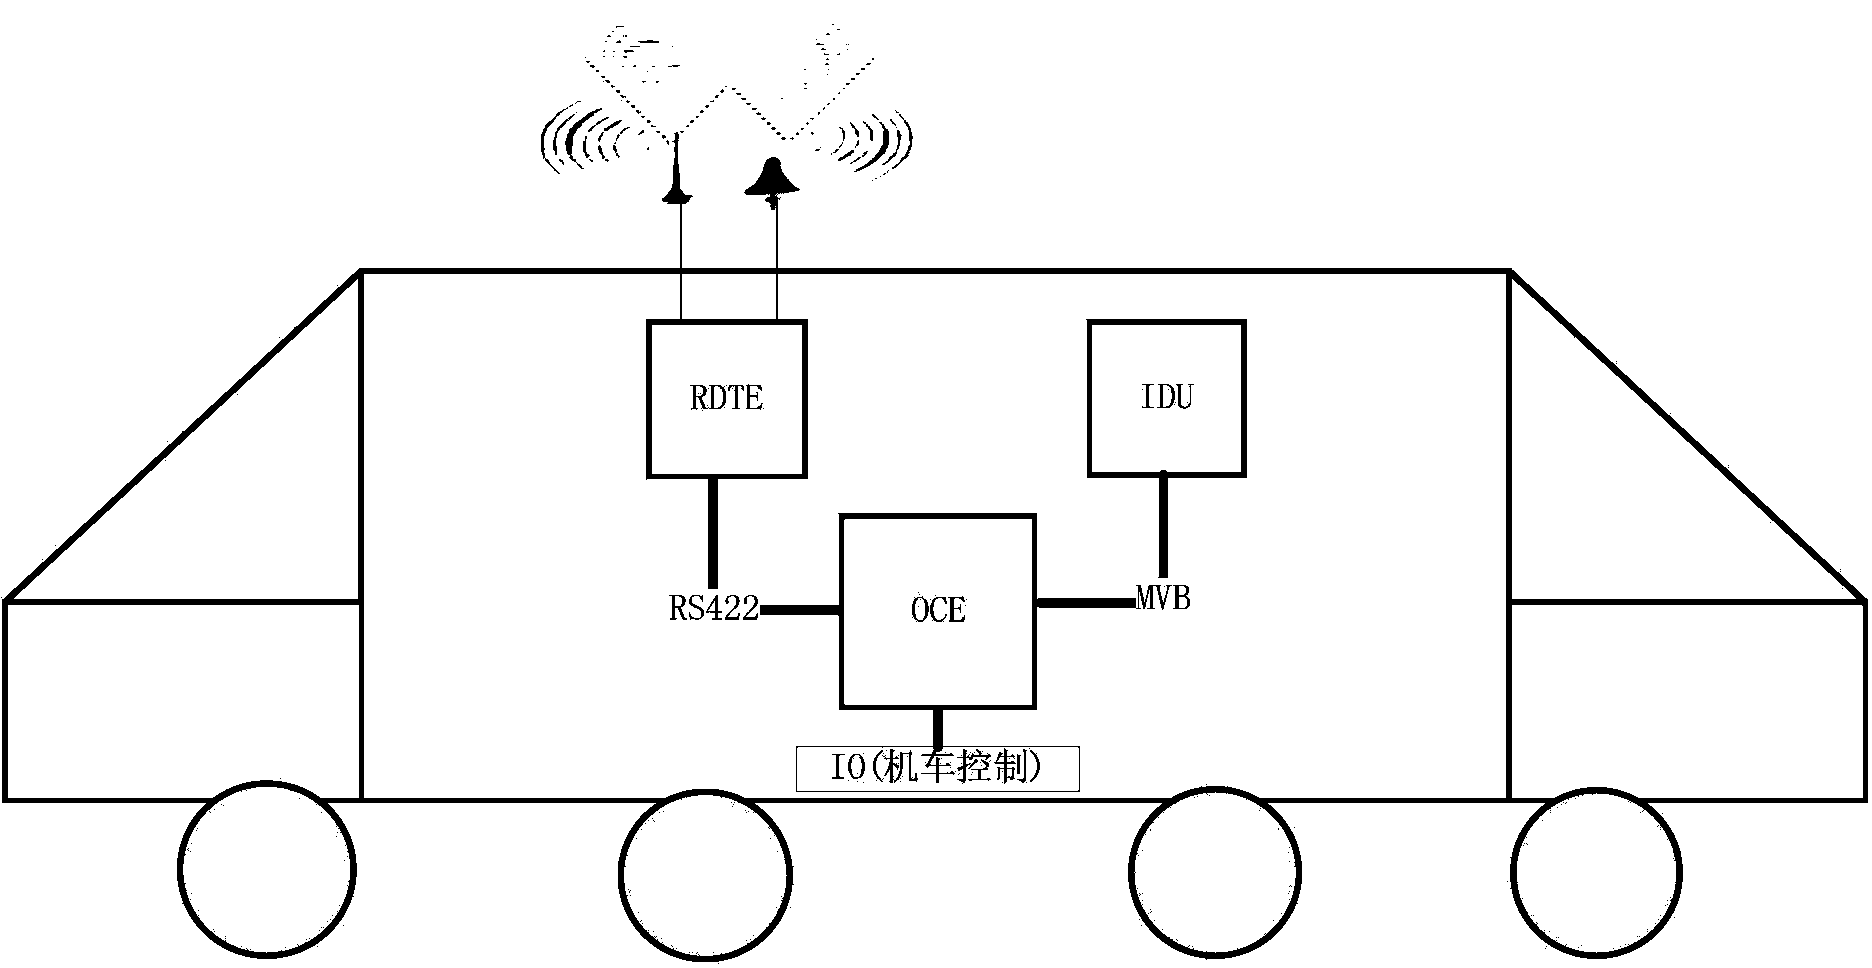 Wireless reconnection marshalling method based on digital station communication